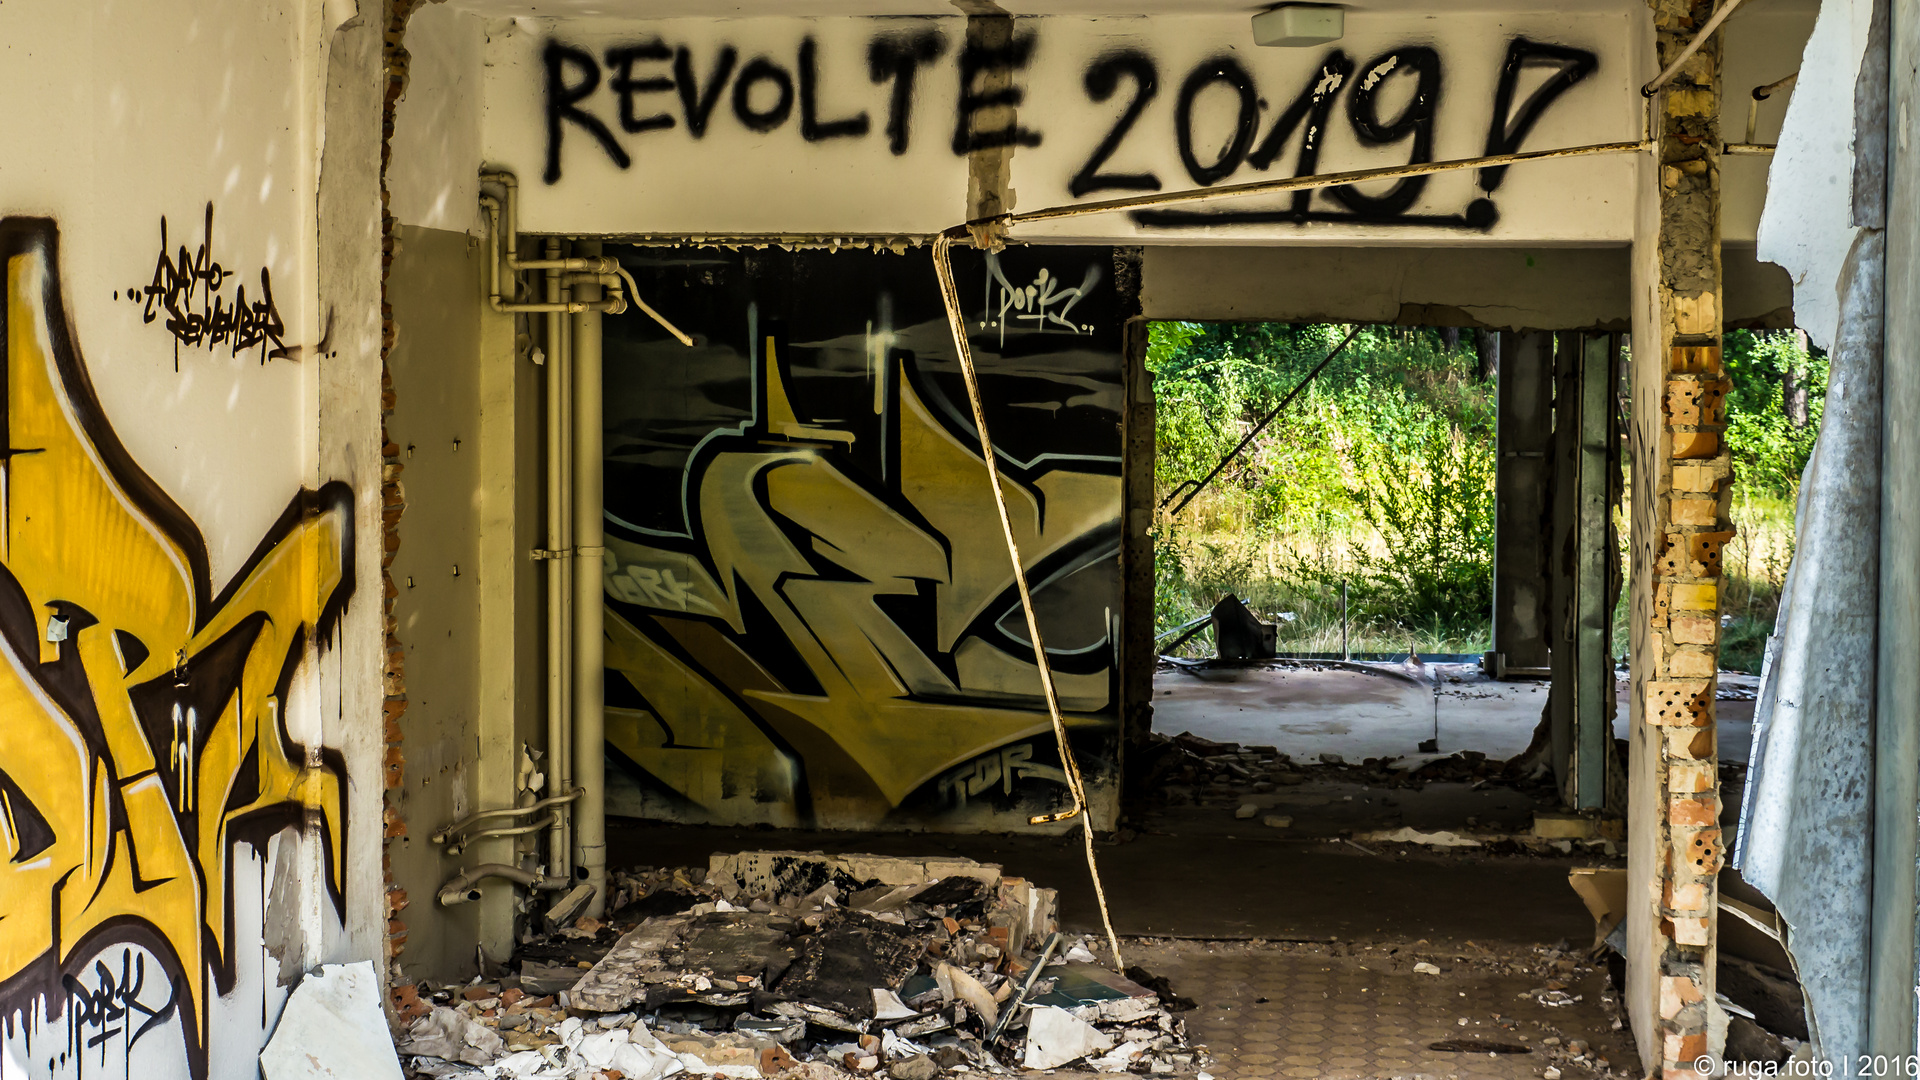 Revolte 2019!